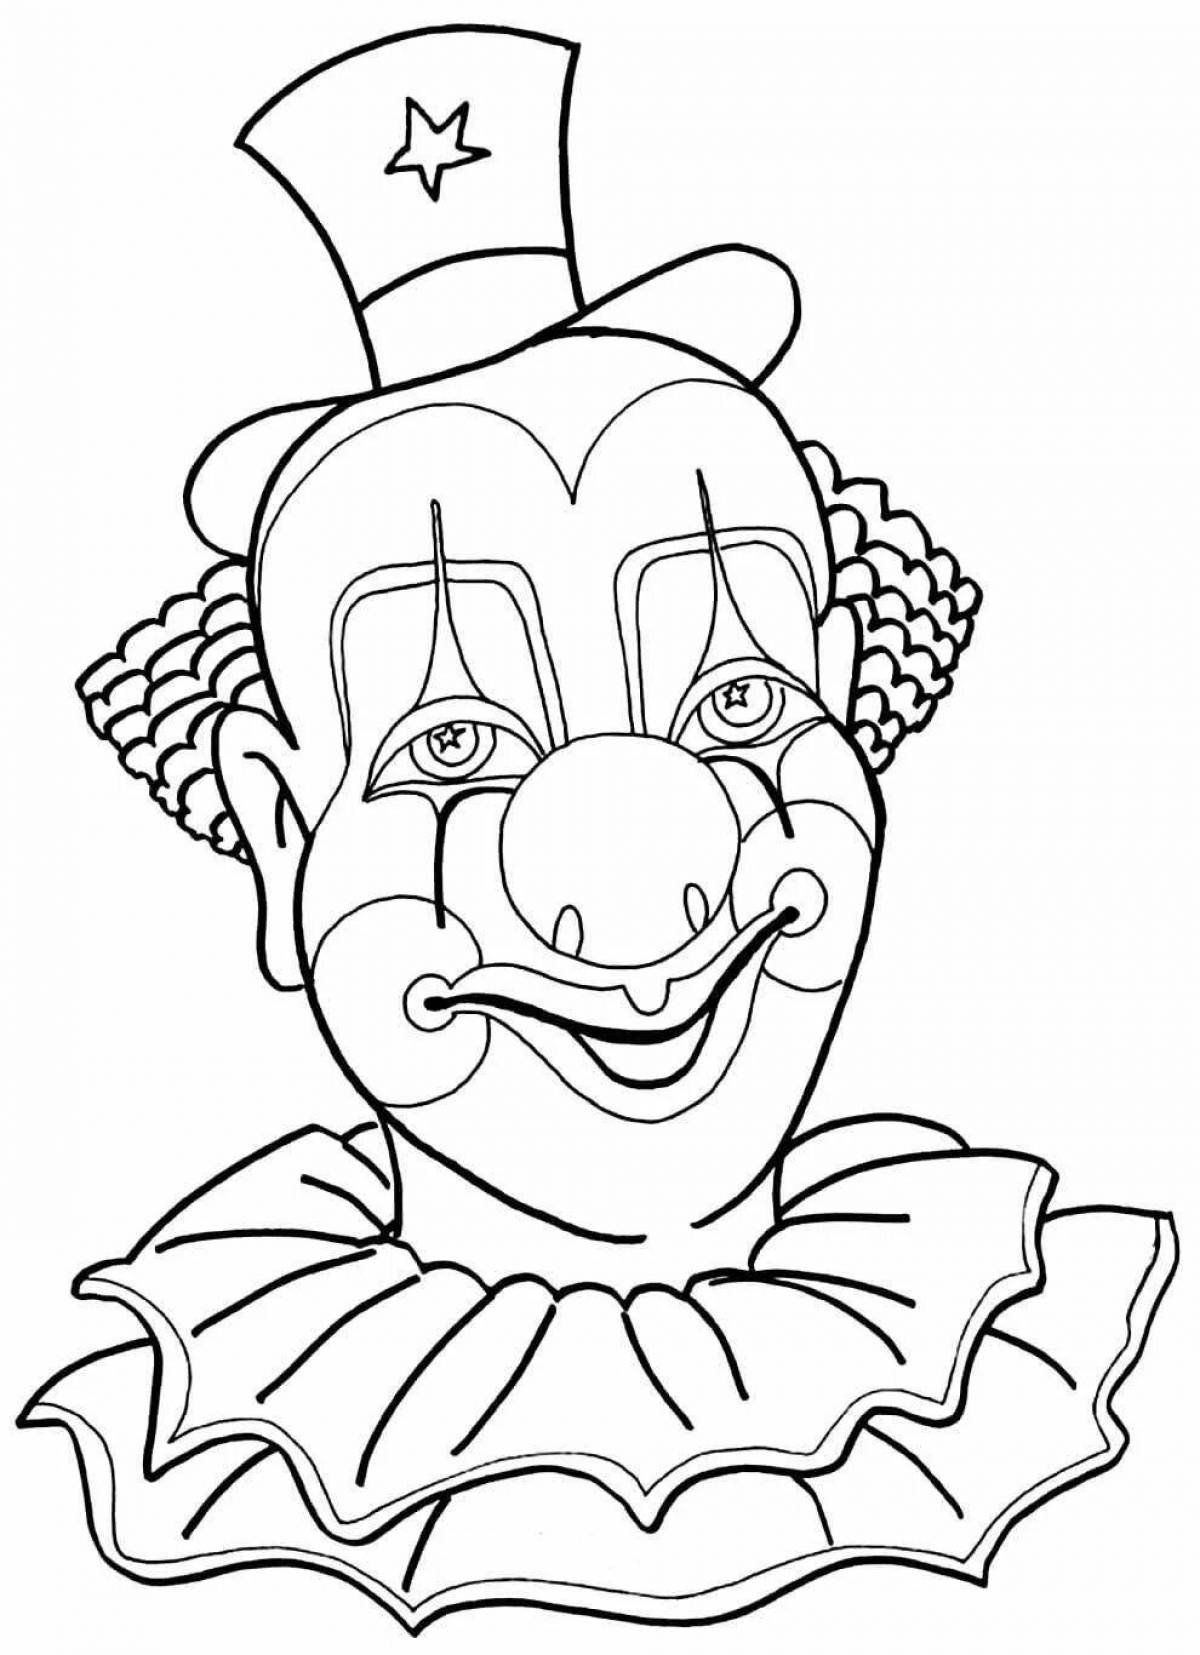 Шаблон маски клоуна распечатать. Клоун раскраска. Клоун раскраска для детей. Клоун рисунок. Лицо клоуна раскраска.